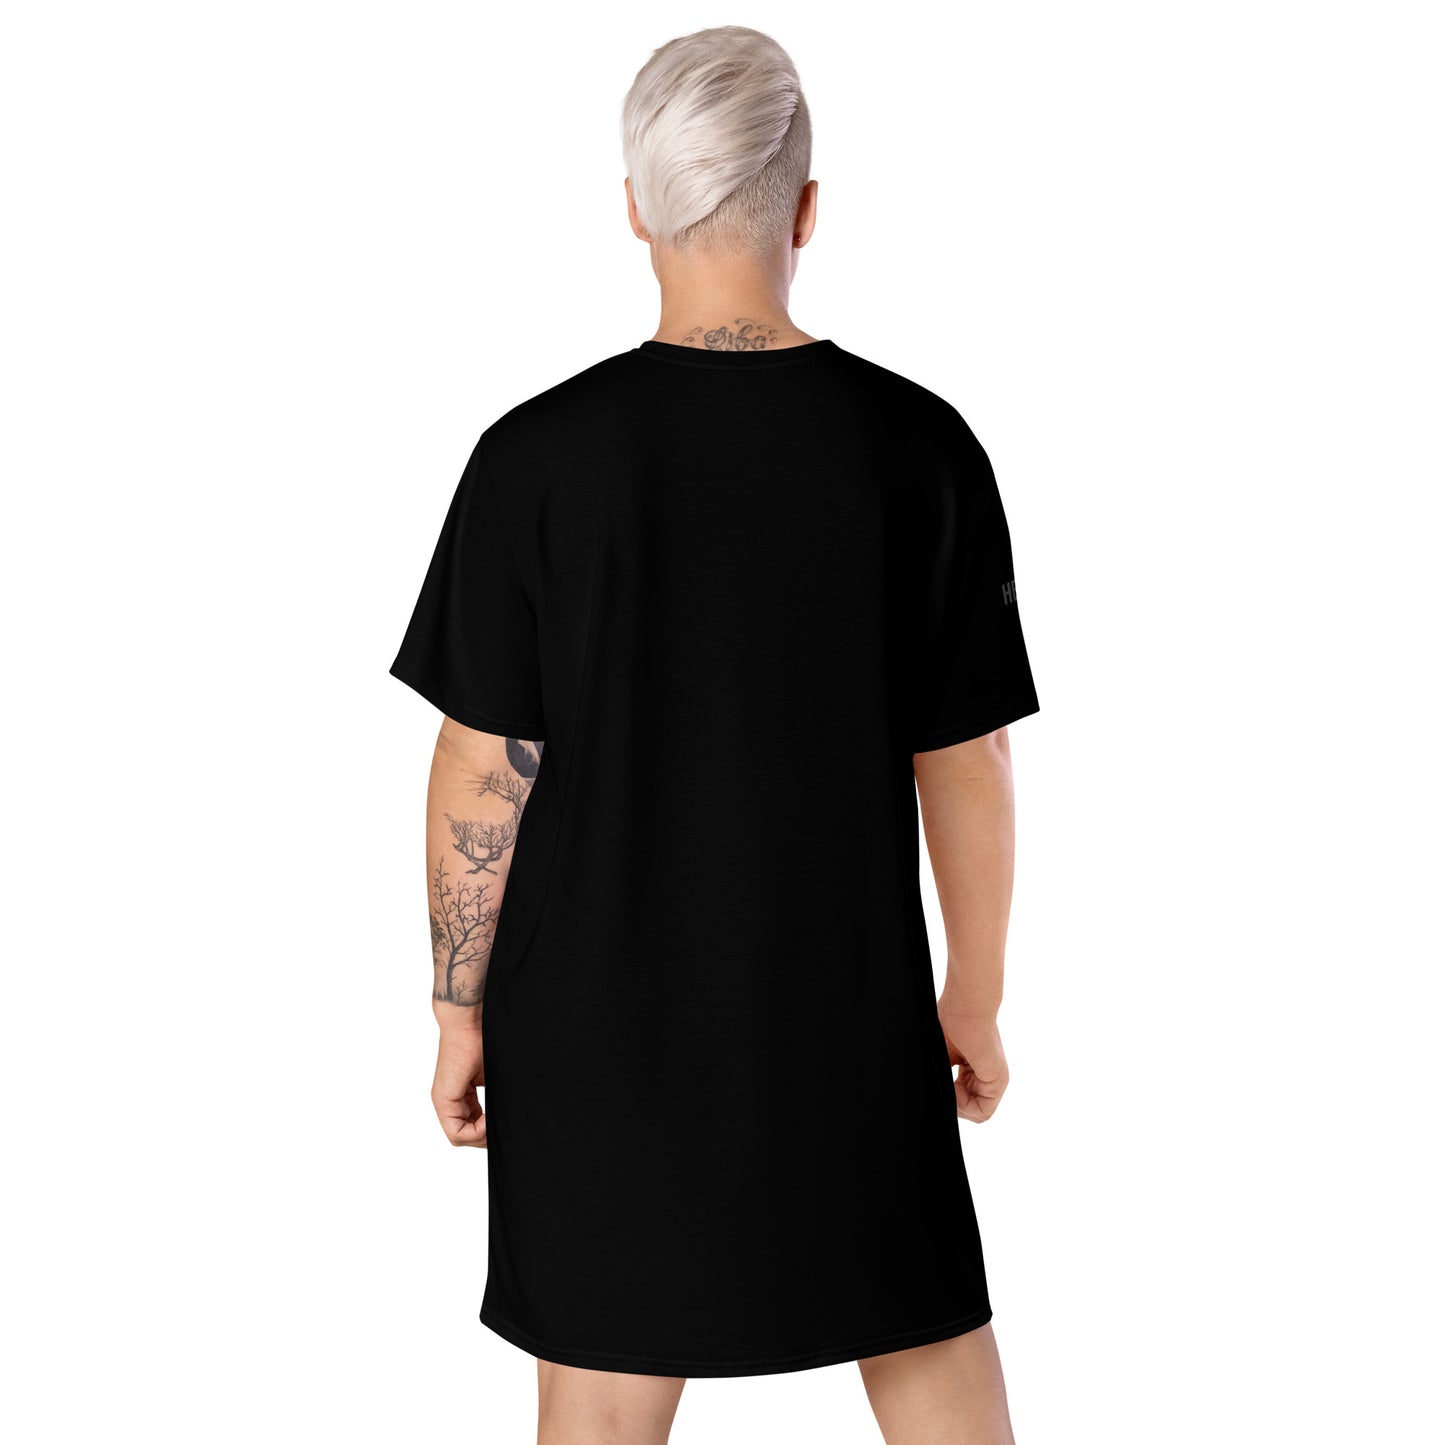 Sinead O'Connor T-Shirt Dress